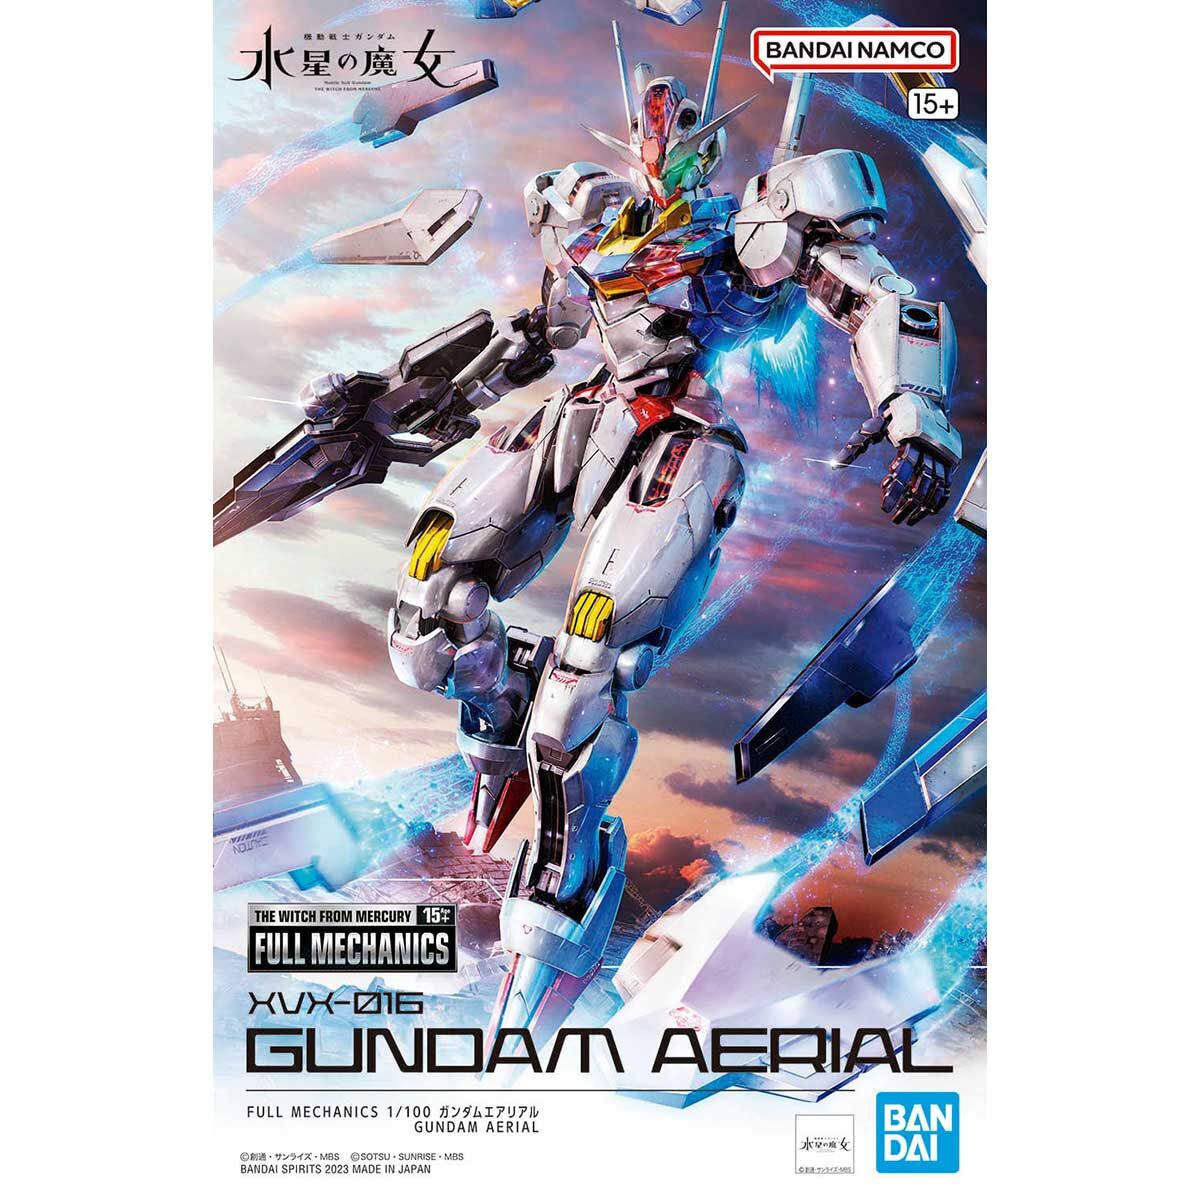 BANDAI Hobby - Maquette Gundam - Aerial Gundam SD Ex-Standard Gunpla 8cm -  4573102630315